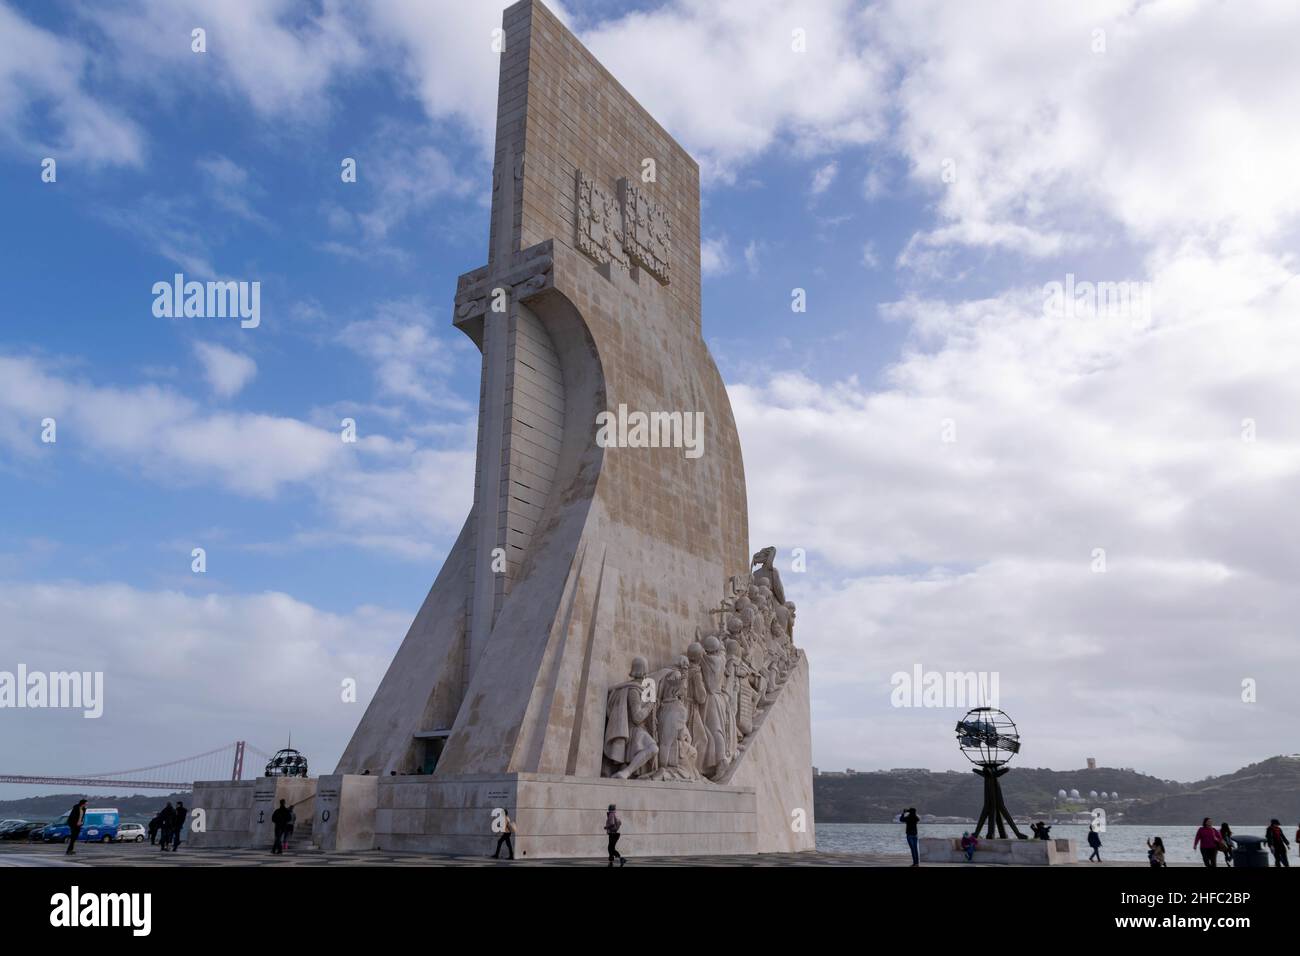 Lisbon, Portugal - 22 November 2019: Monument to the discoveries, Padrão dos Descobrimentos, on the Tagus in Belem, Lisboa. Celebrating the Portuguese Stock Photo